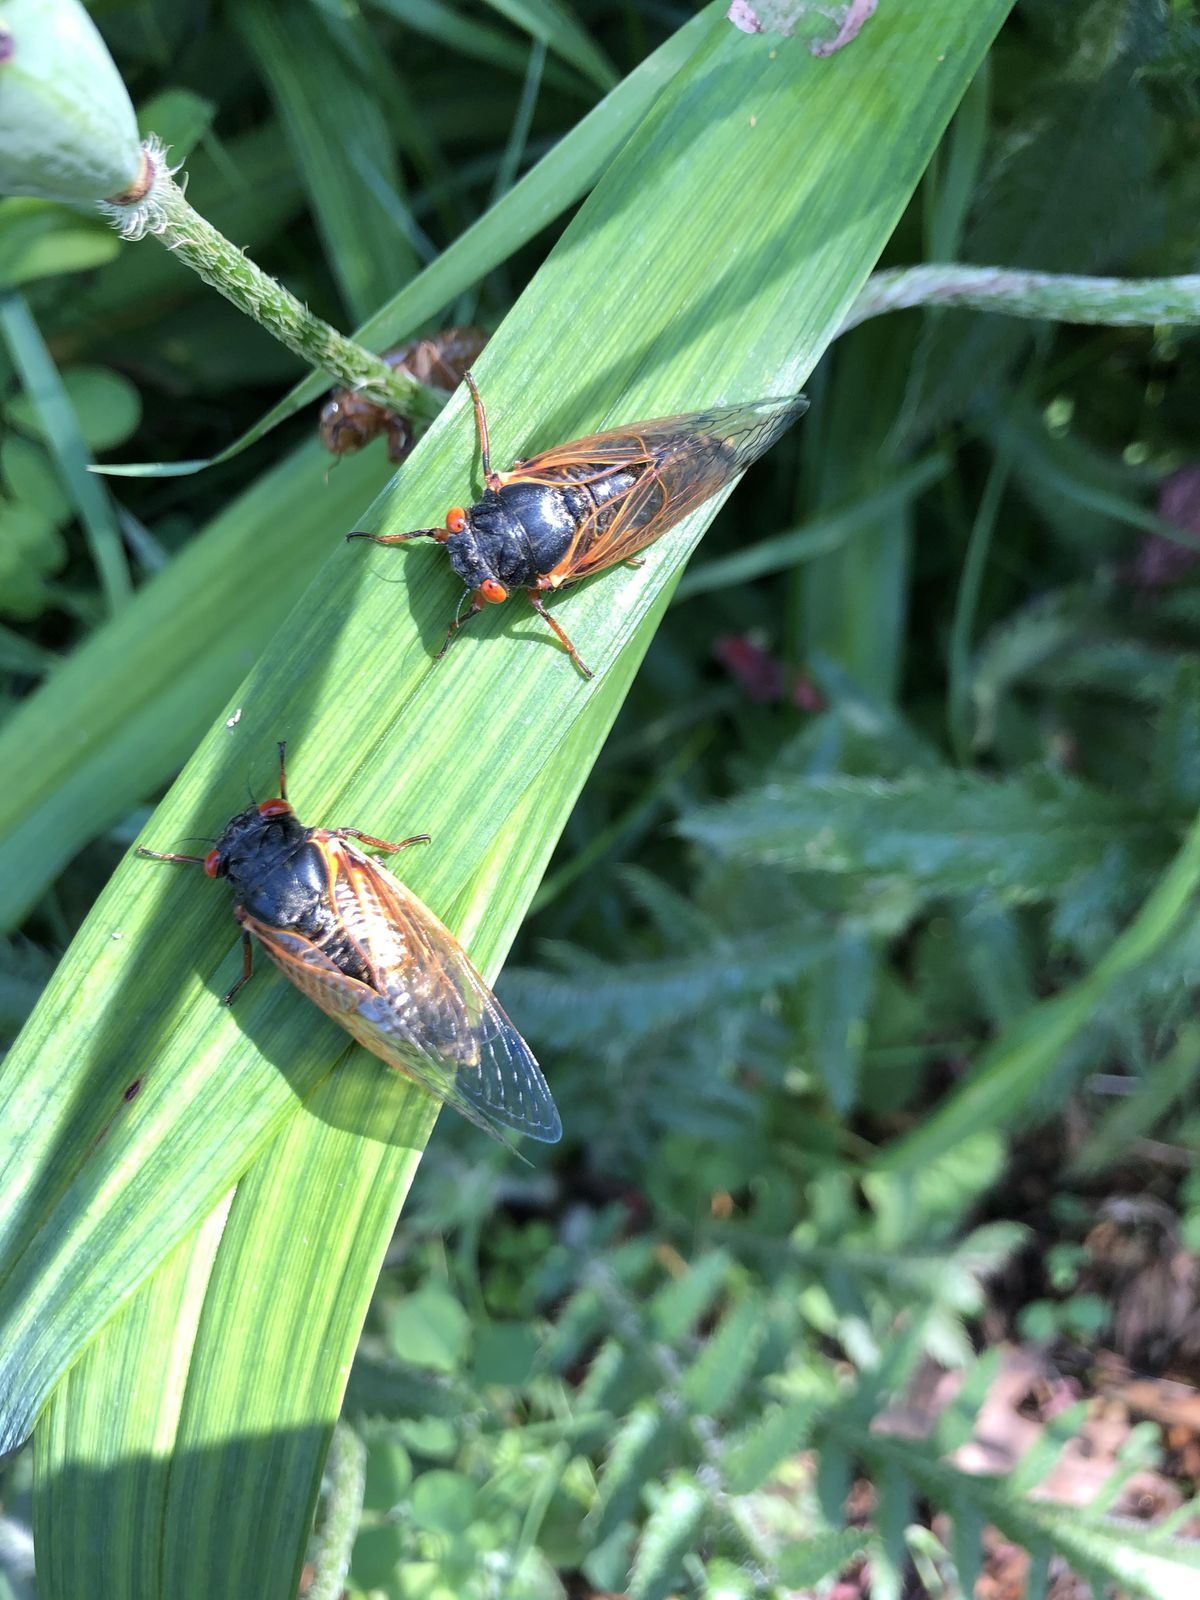 Periodical cicadas in Brookfield. Provided by David Jakubiak